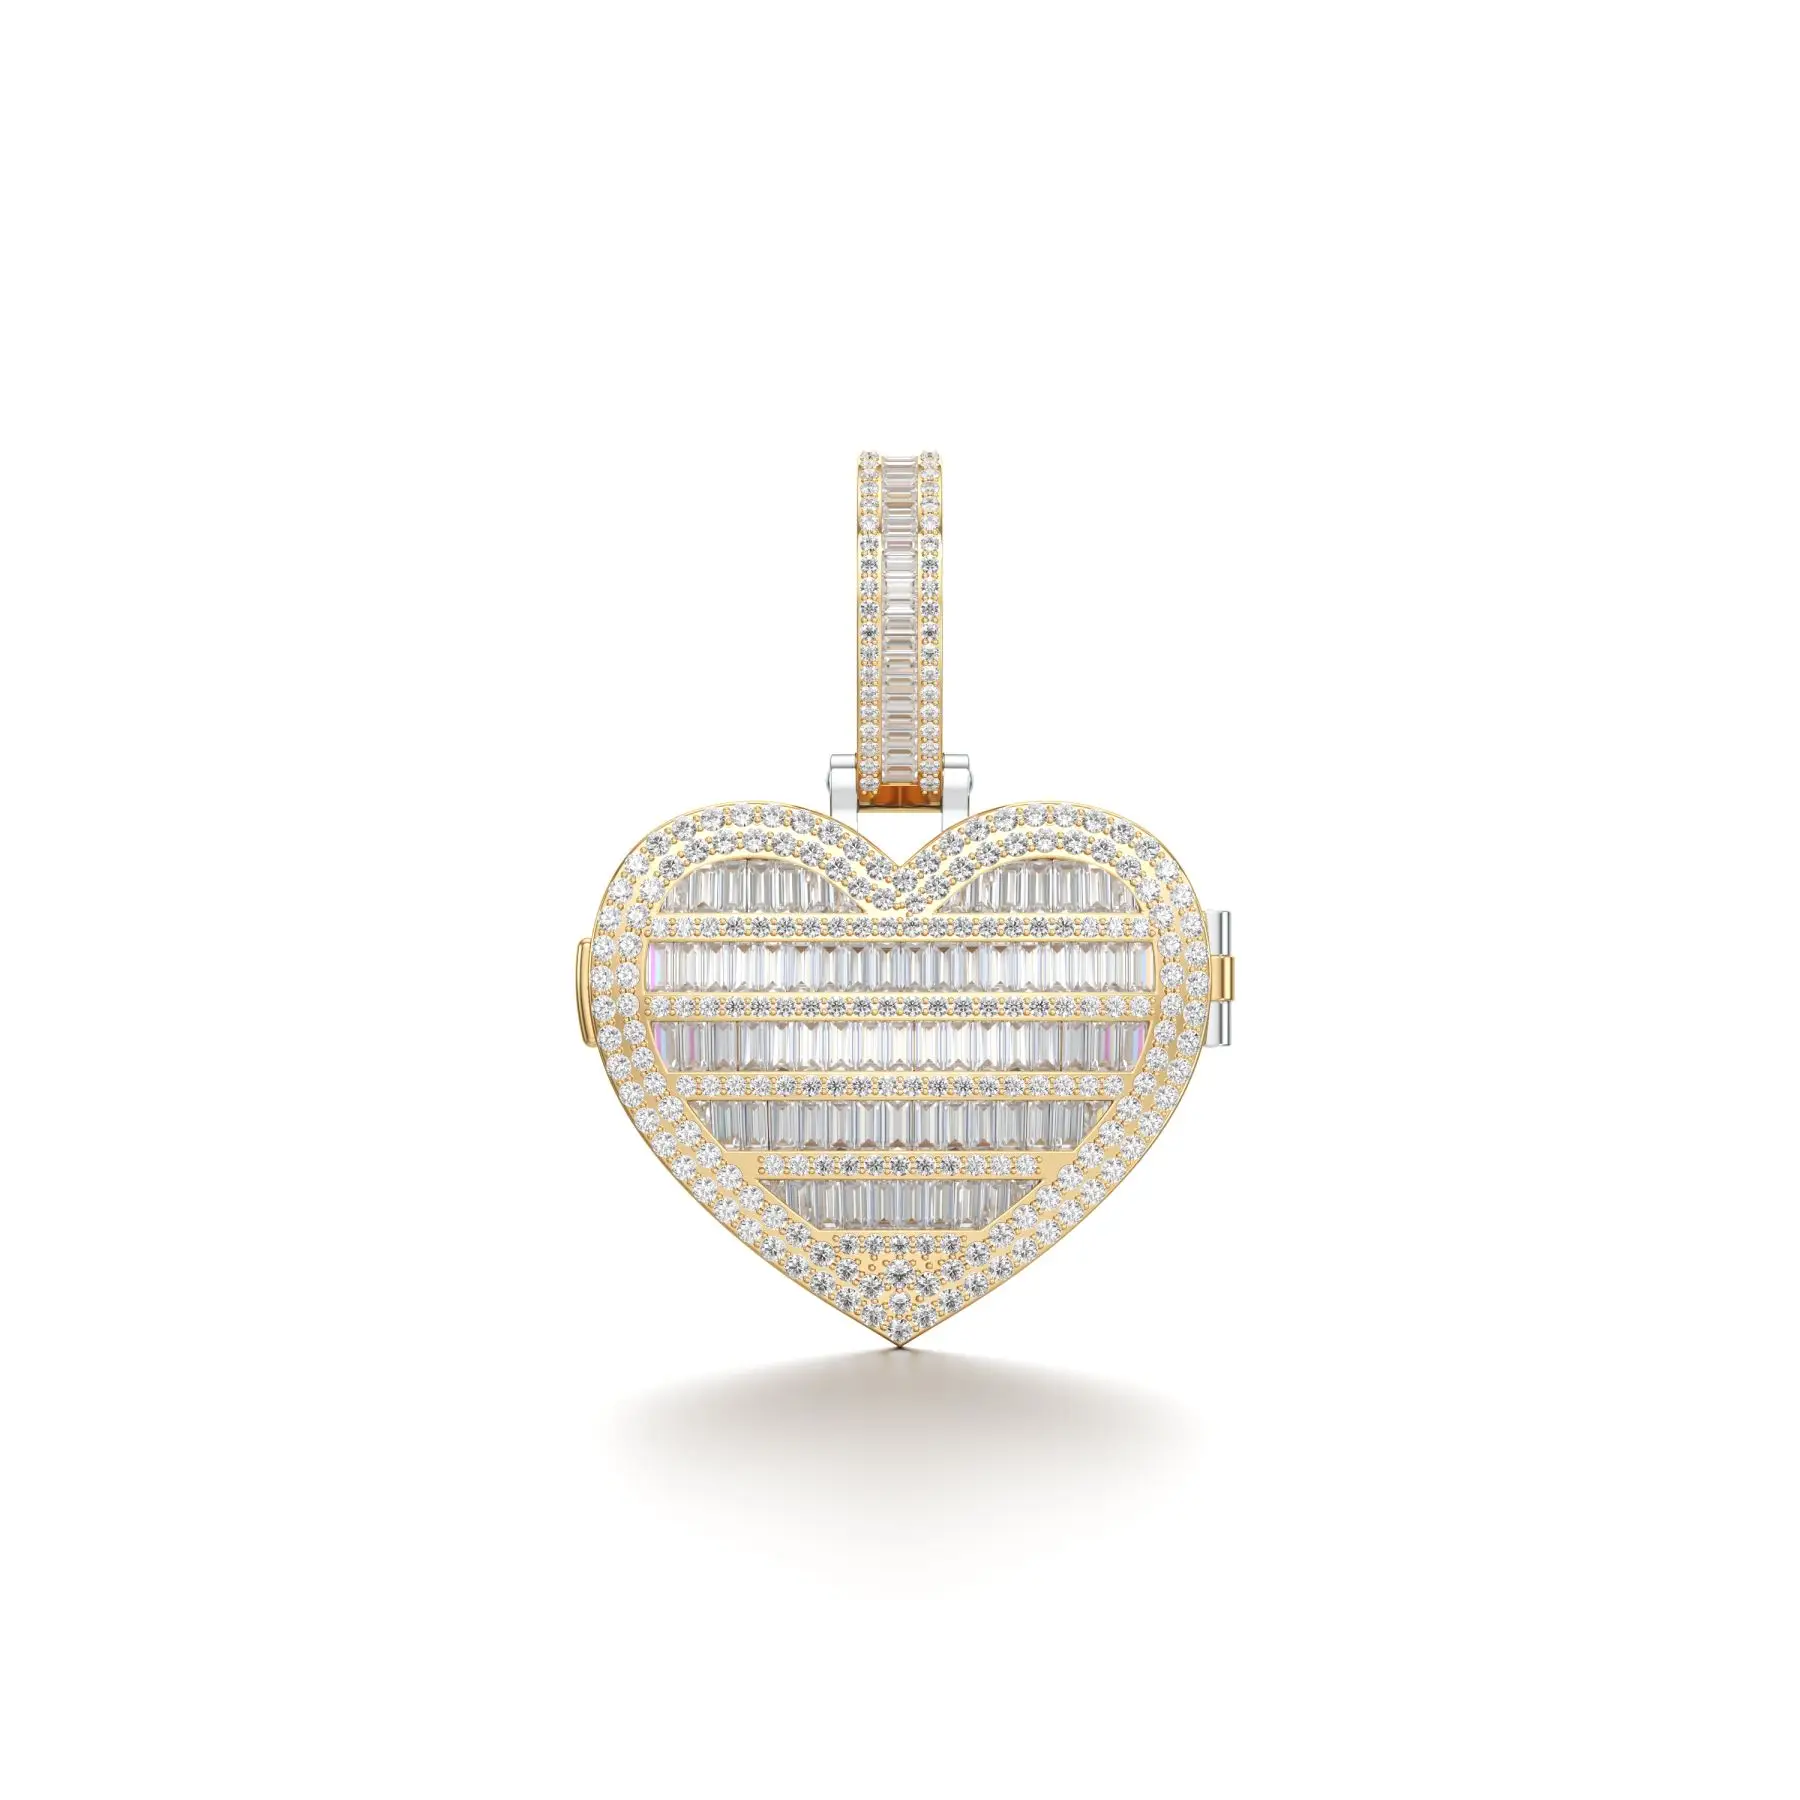 Blinging Heart Keepsake Diamond Pendant in Yellow 10k Gold